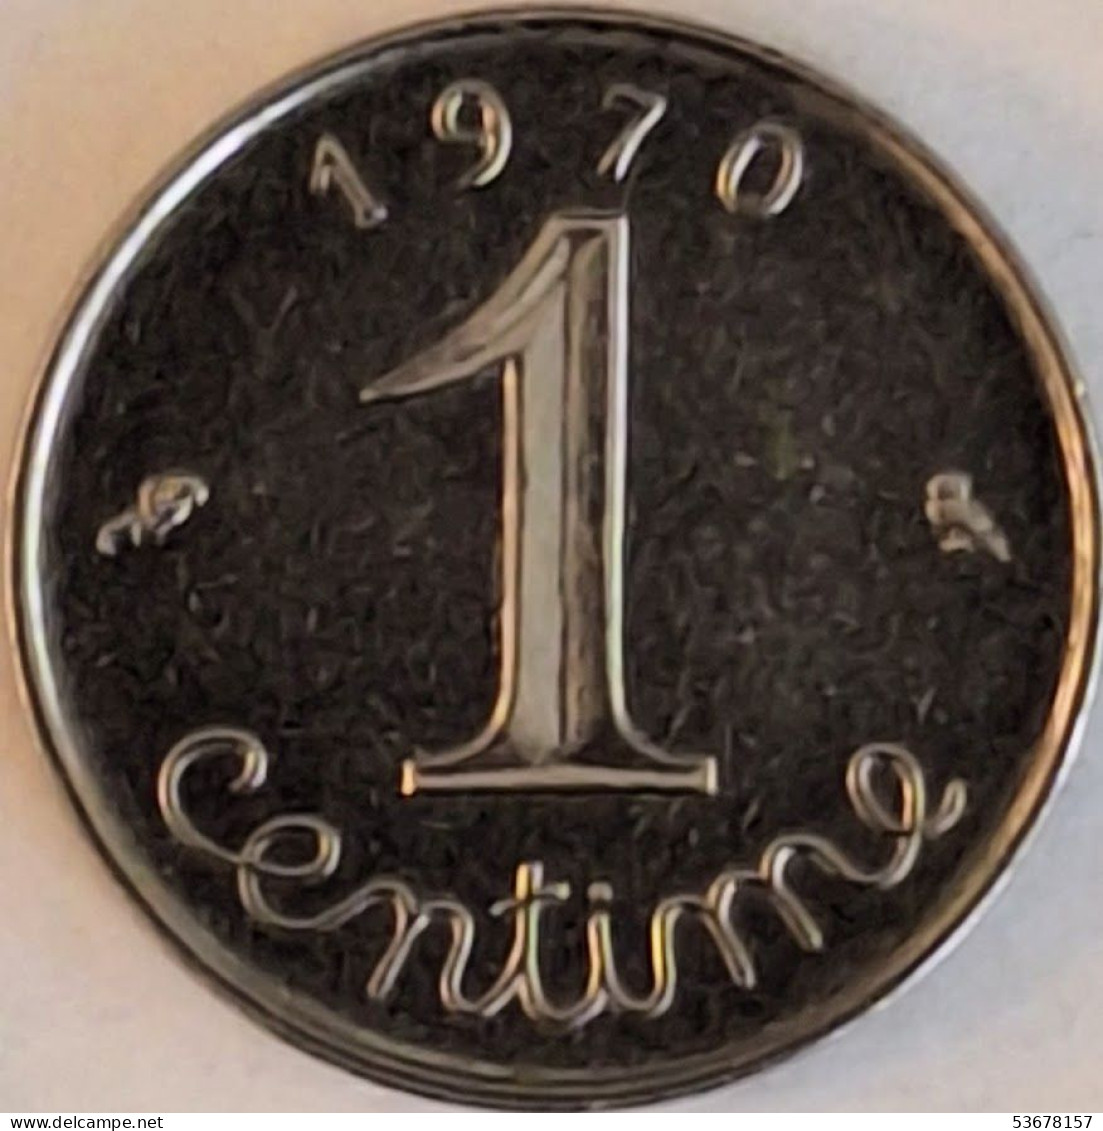 France - Centime 1970, KM# 928 (#4179) - 1 Centime